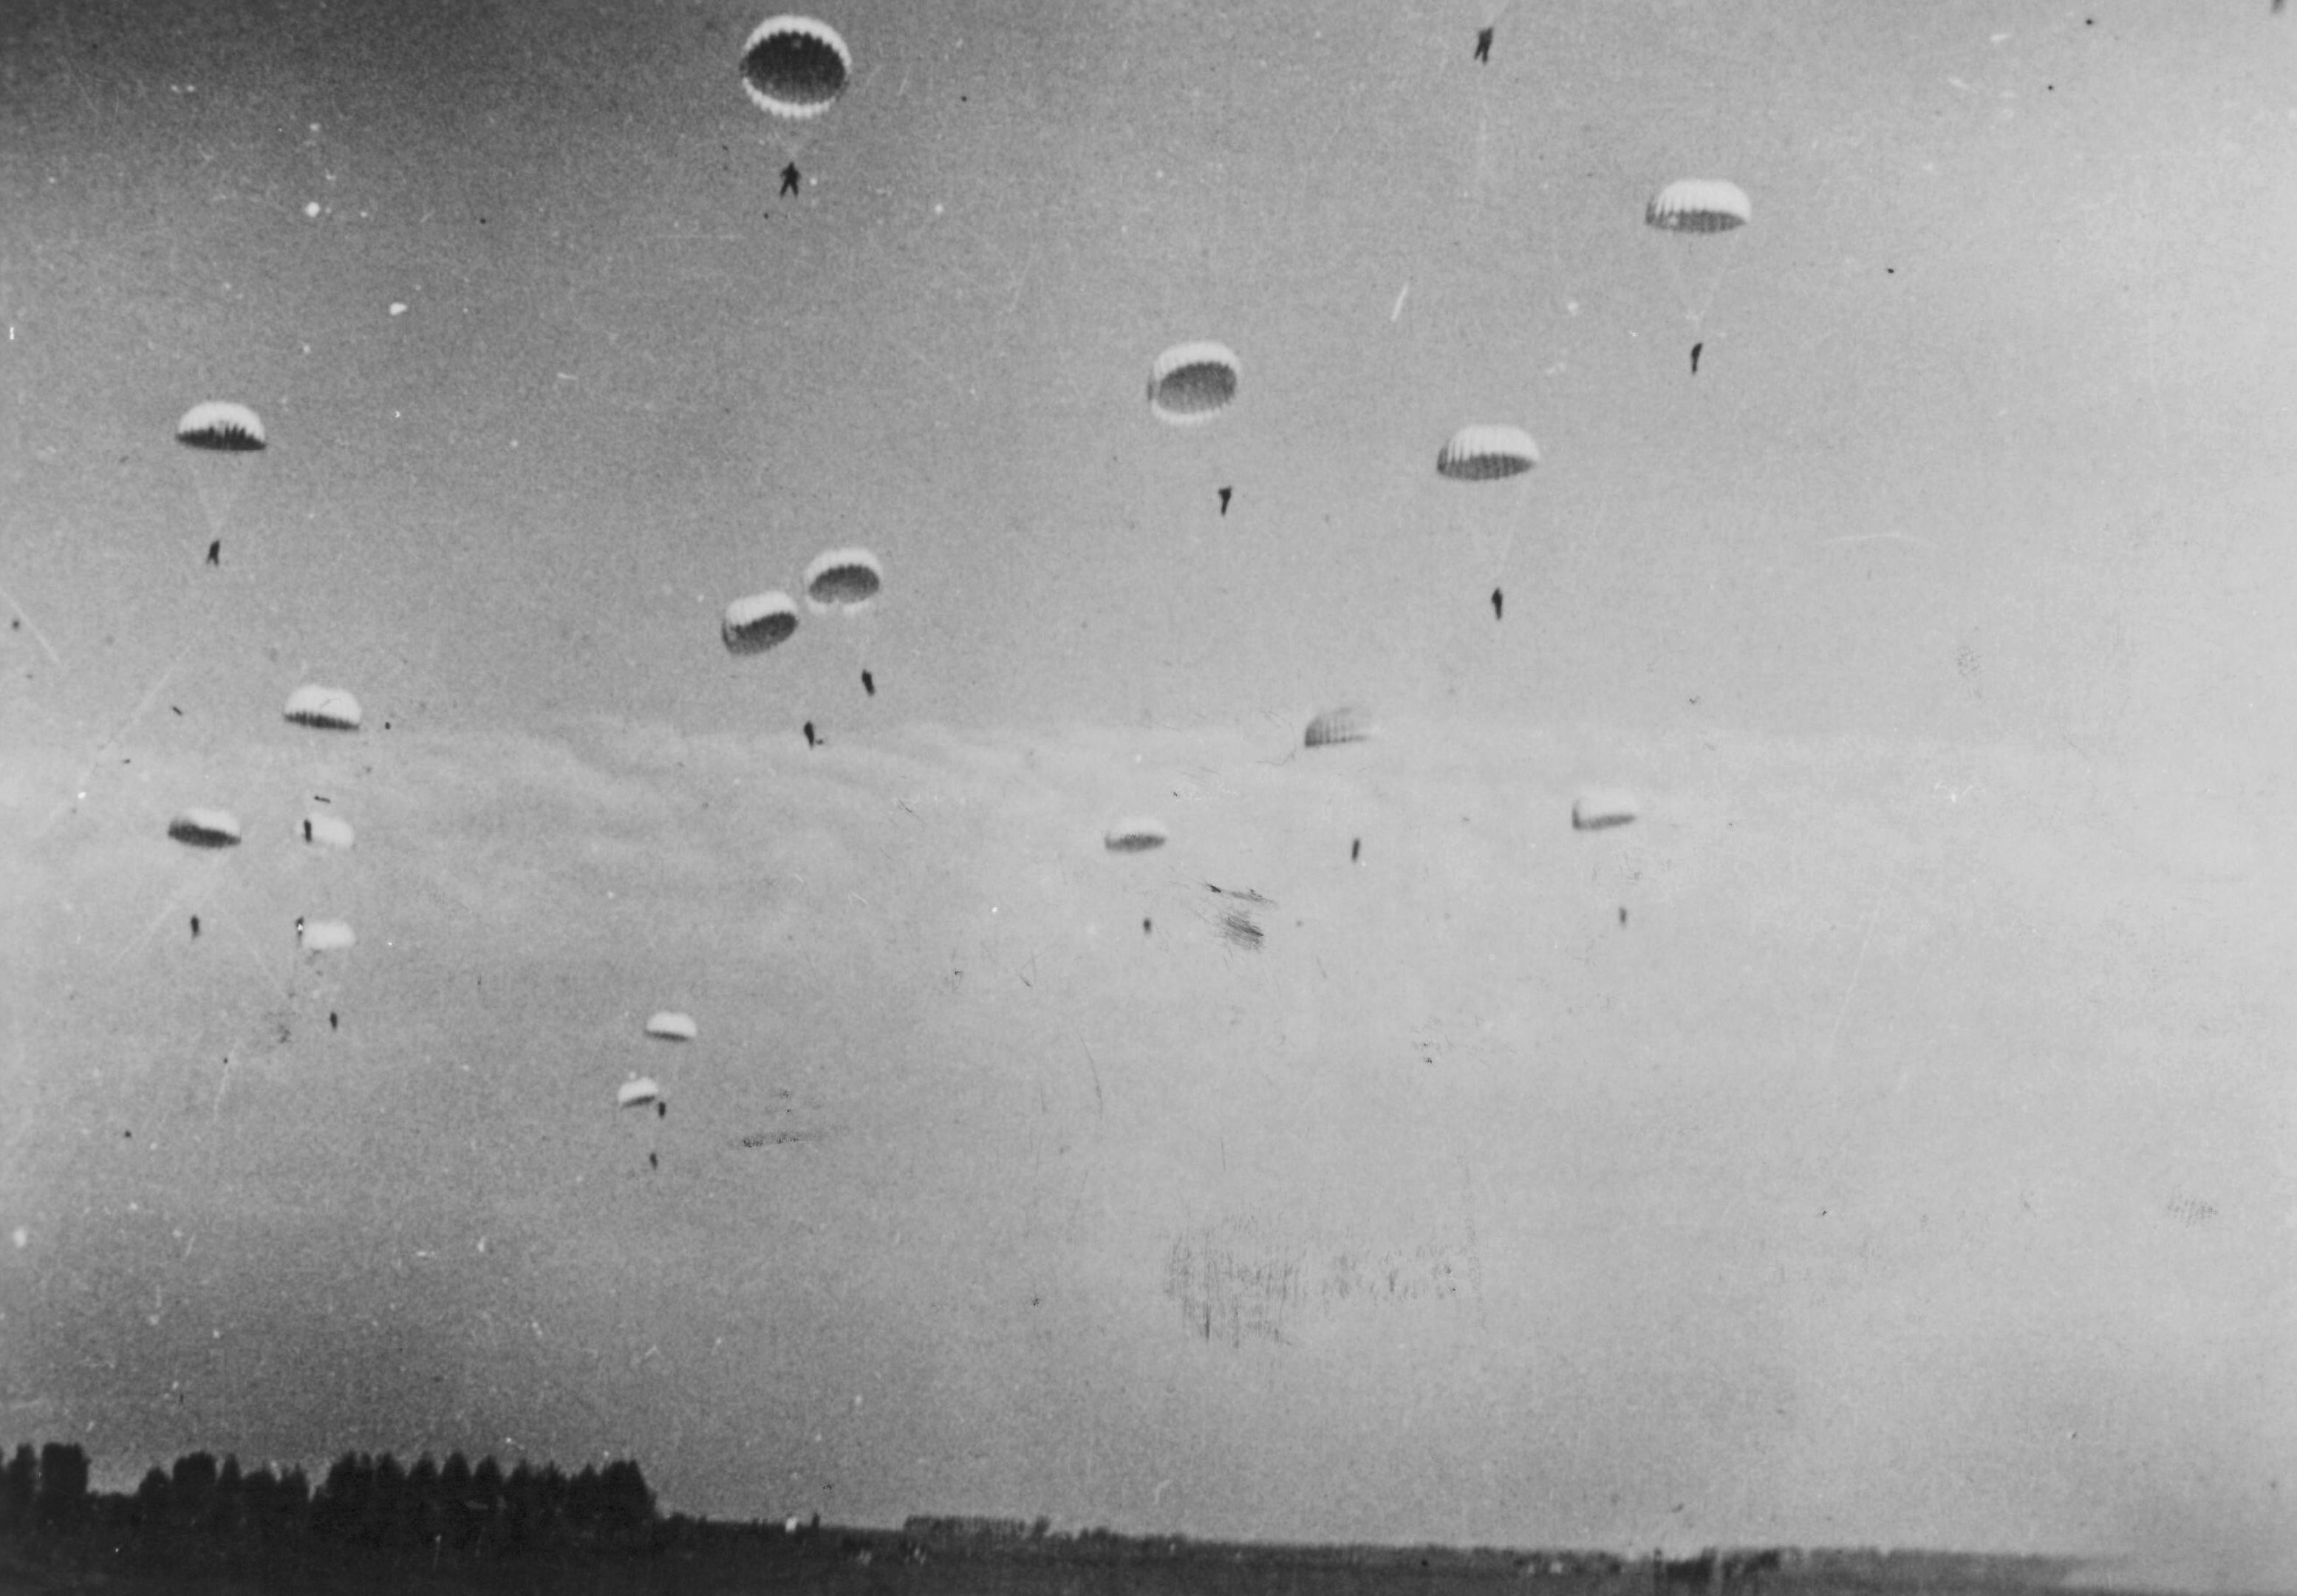 Fall Gelb German paratroopers at Valkenburg 10th May 1940 NIOD